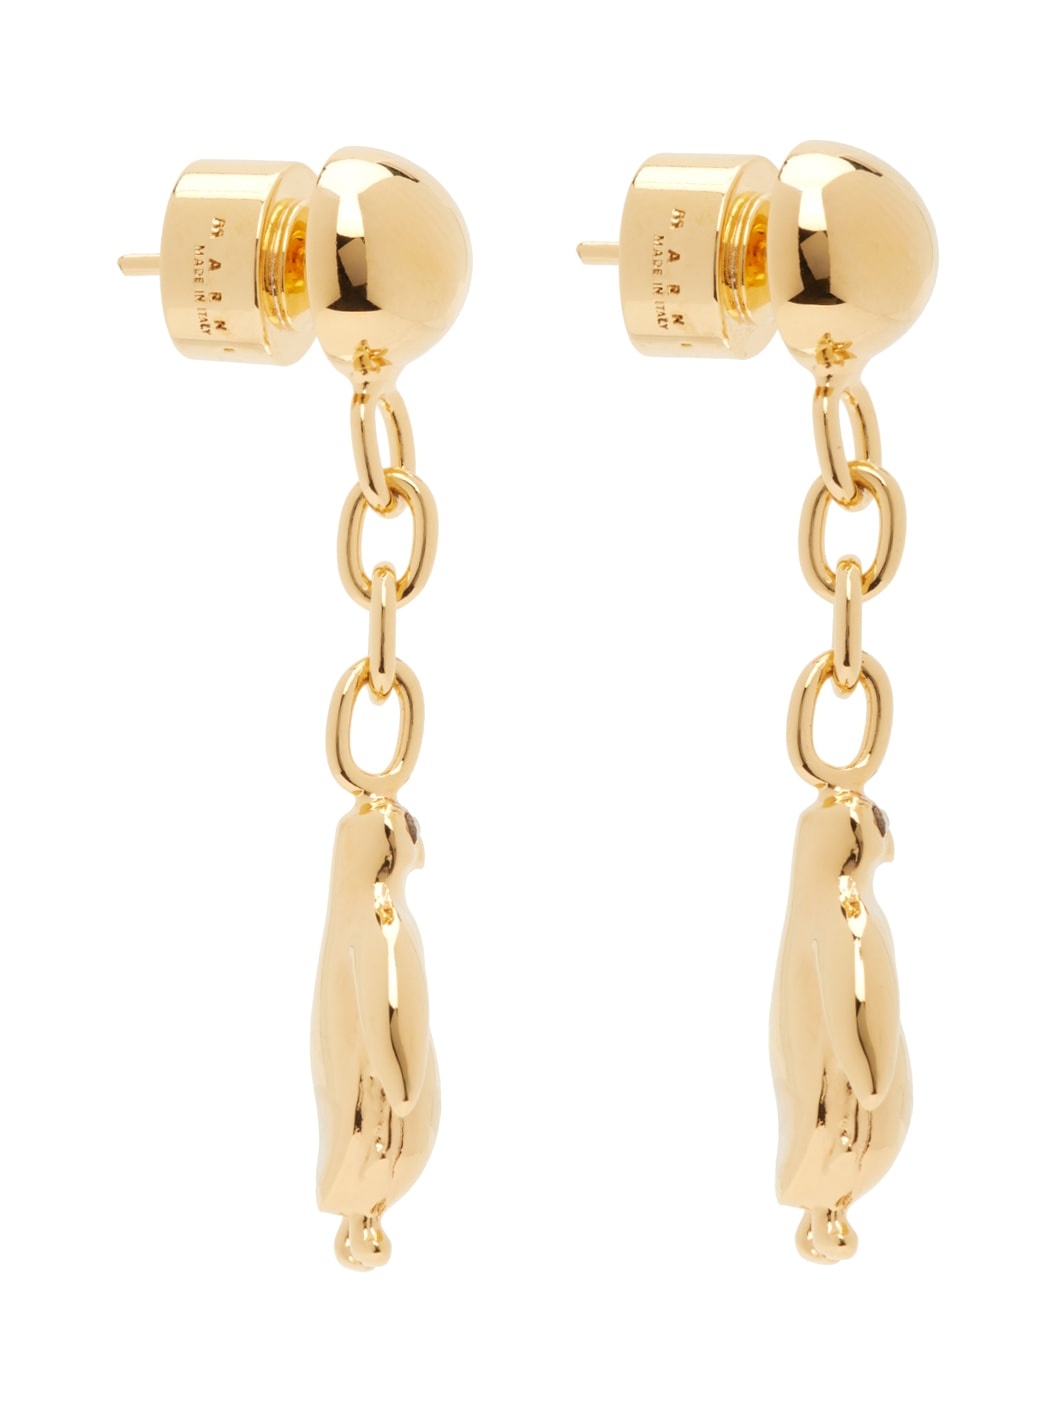 Gold Charm Earrings - 2